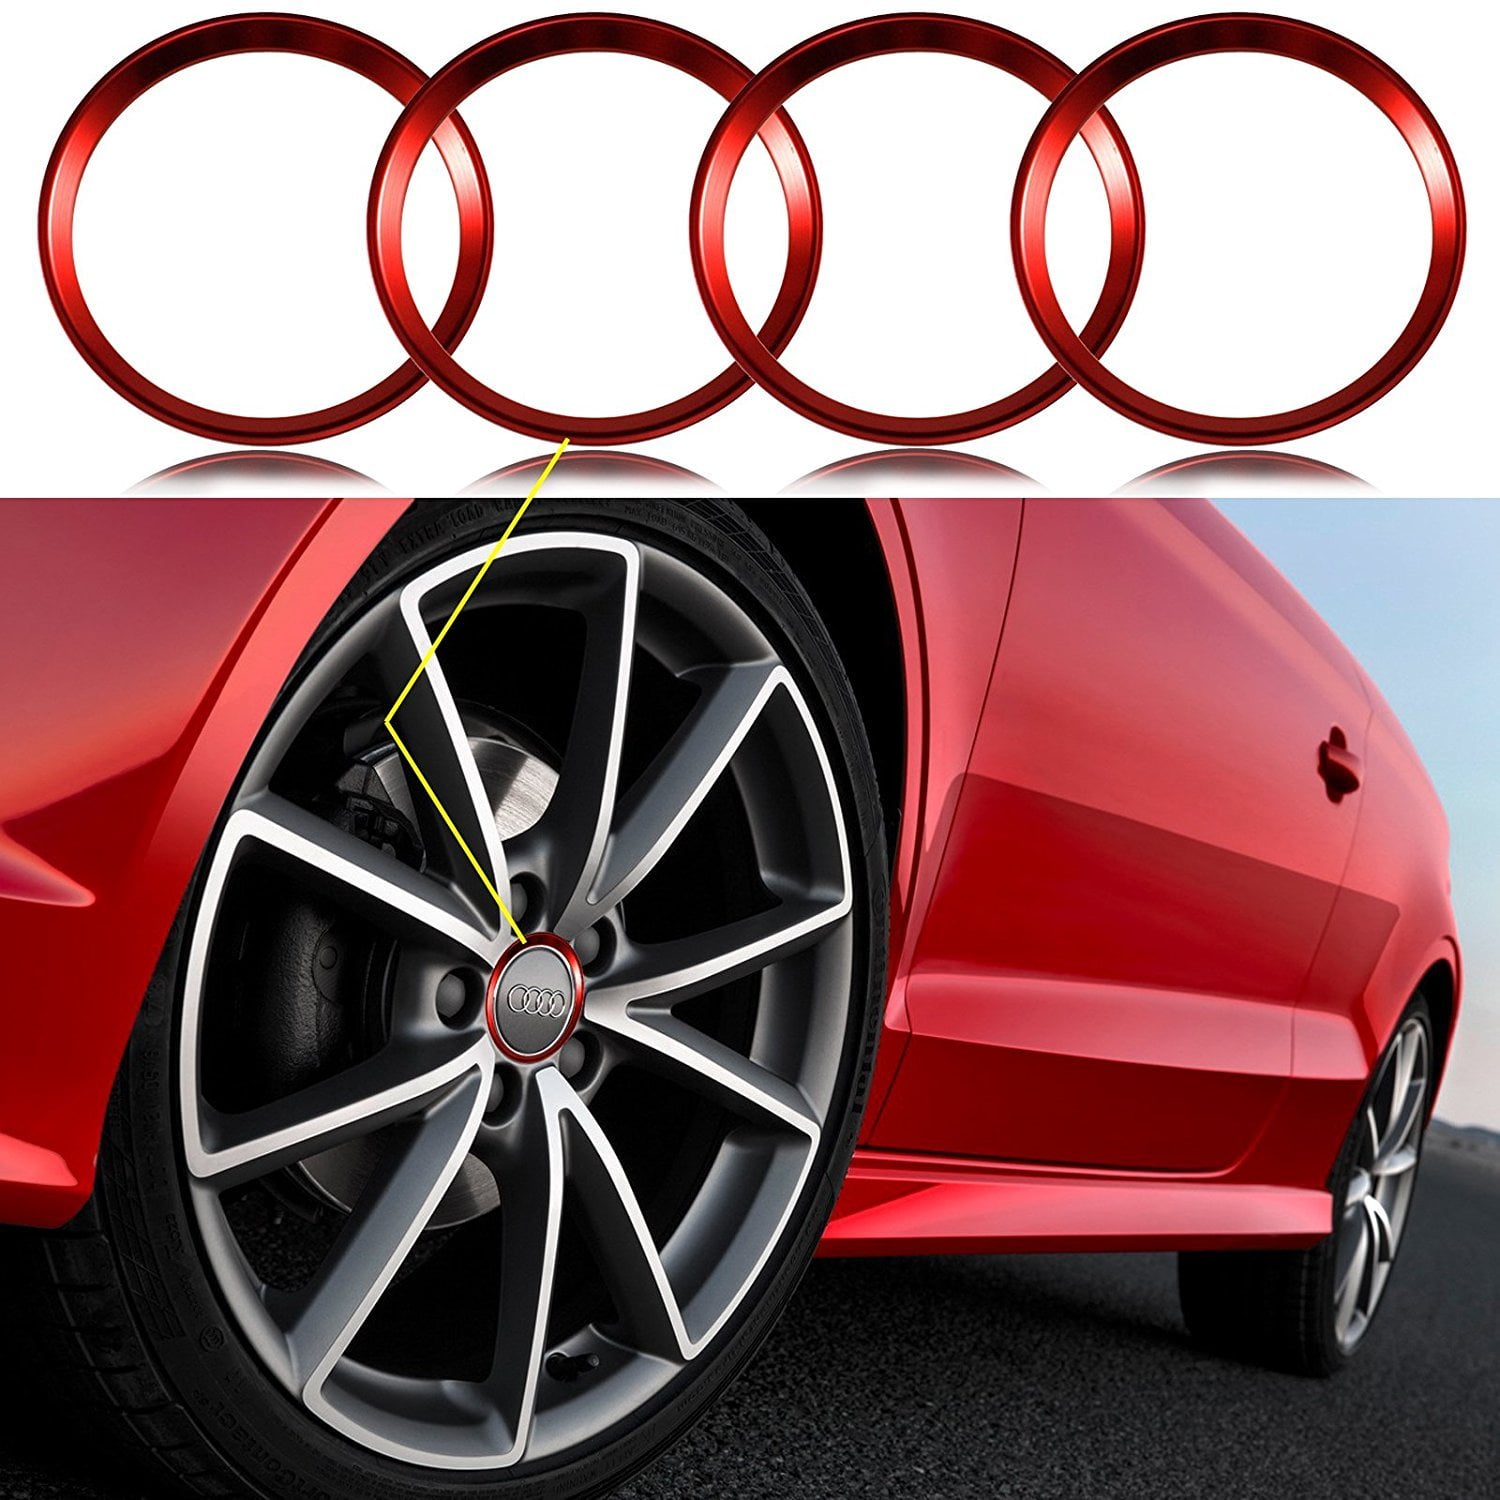 Xotic Tech 4 Pieces Red Alloy Car Wheel Rim Center Cap Hub Rings Decoration for Audi A3 A4 A5 TT Quattro Fit BMW X1 X3 X5 1 3 5 6 7 Series